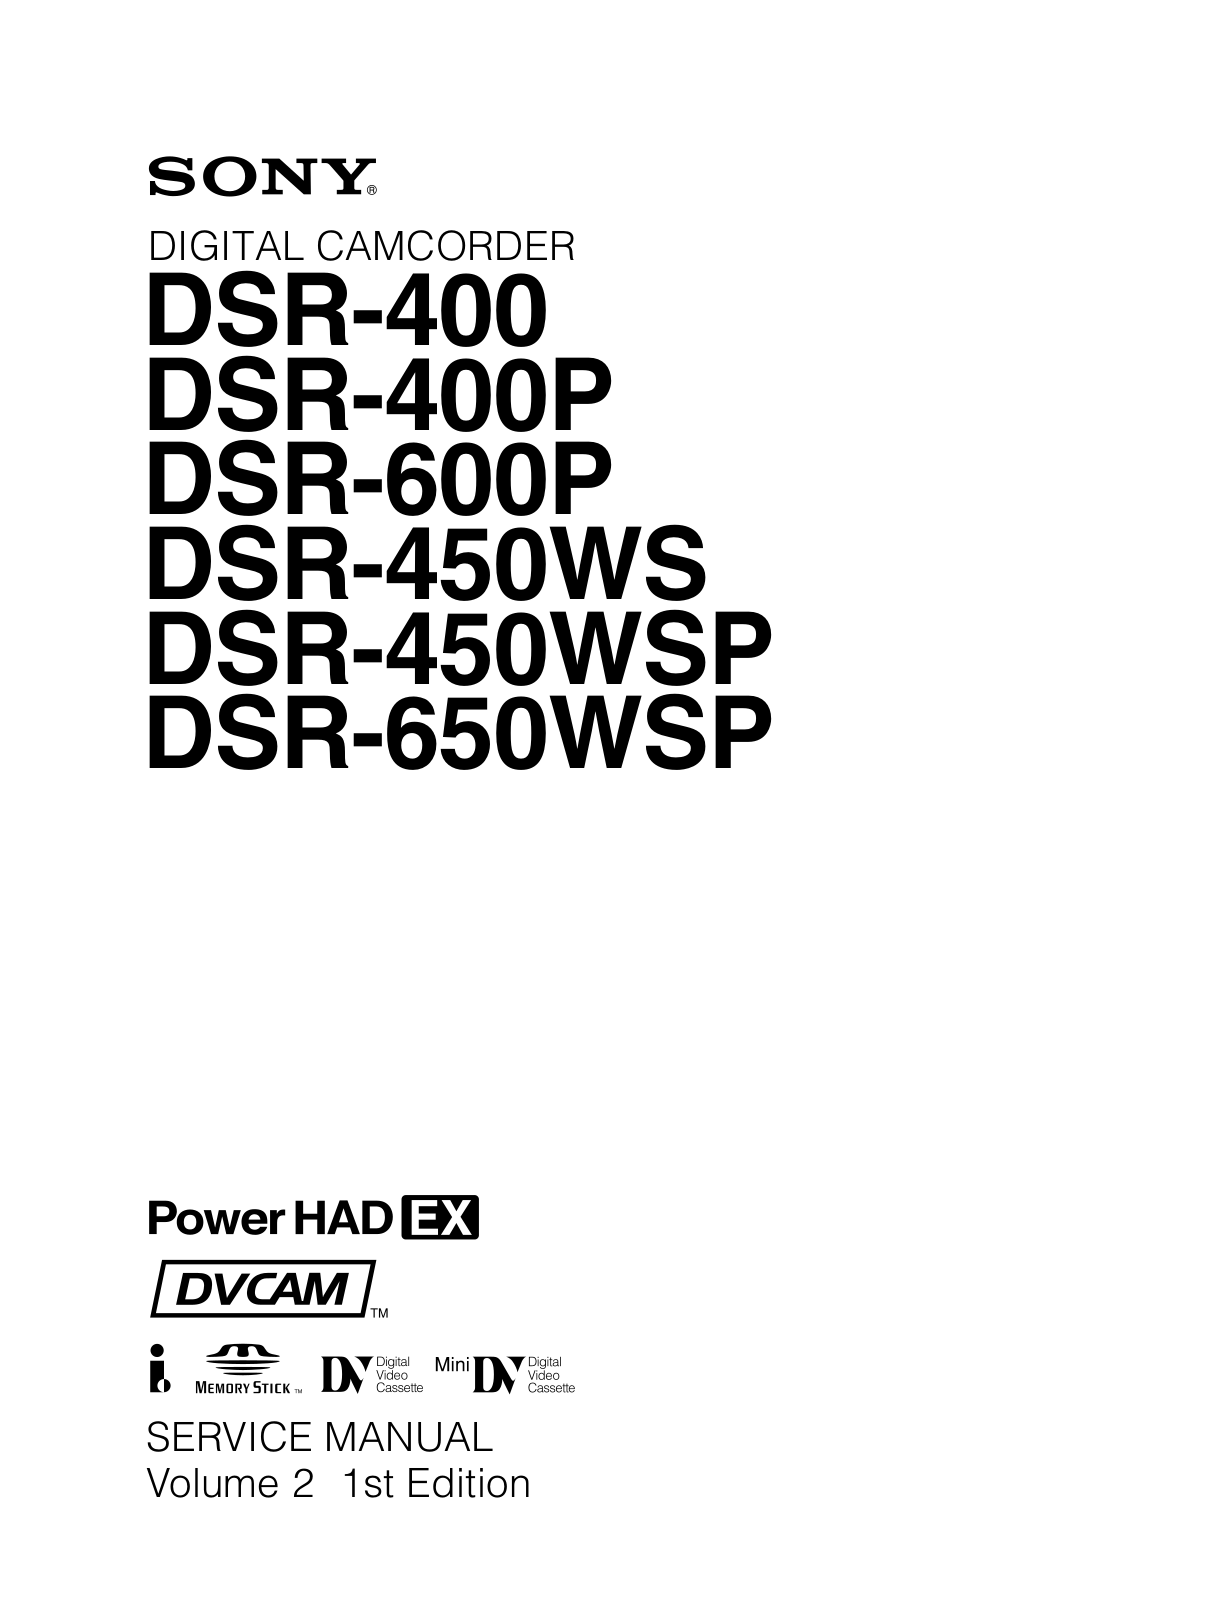 SONY DSR-400, DSR-600, DSR-450, DSR-650 Service Manual